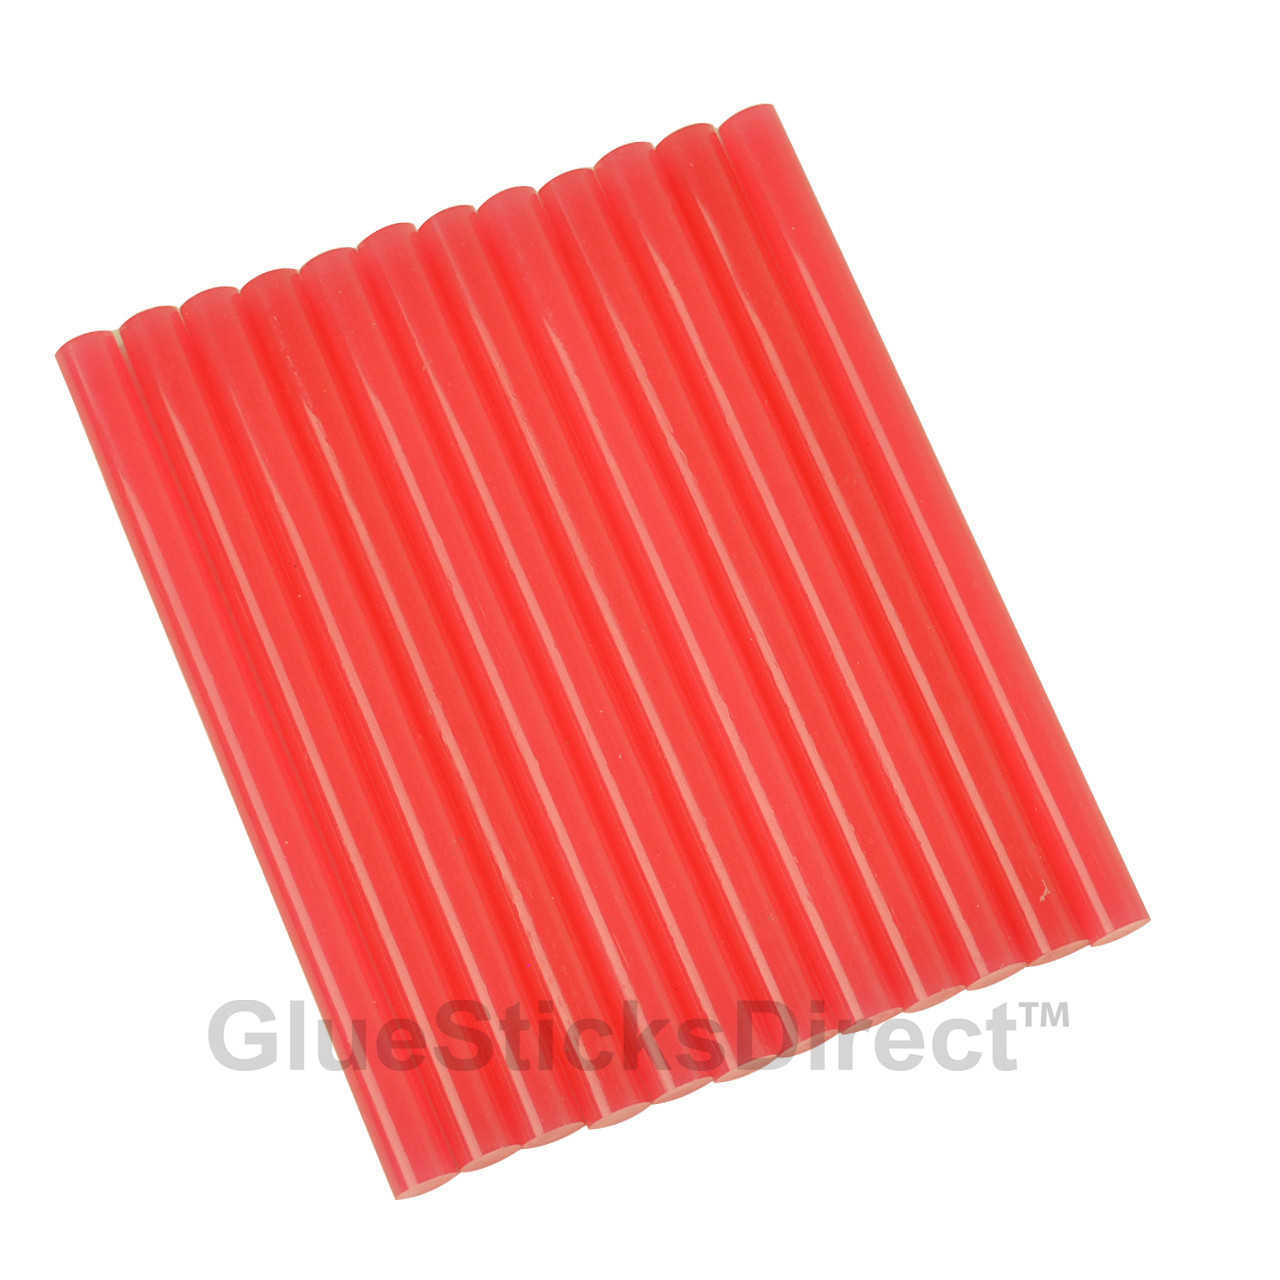 GlueSticksDirect Translucent Watermelon Colored Glue Sticks mini X 4" 5 lbs